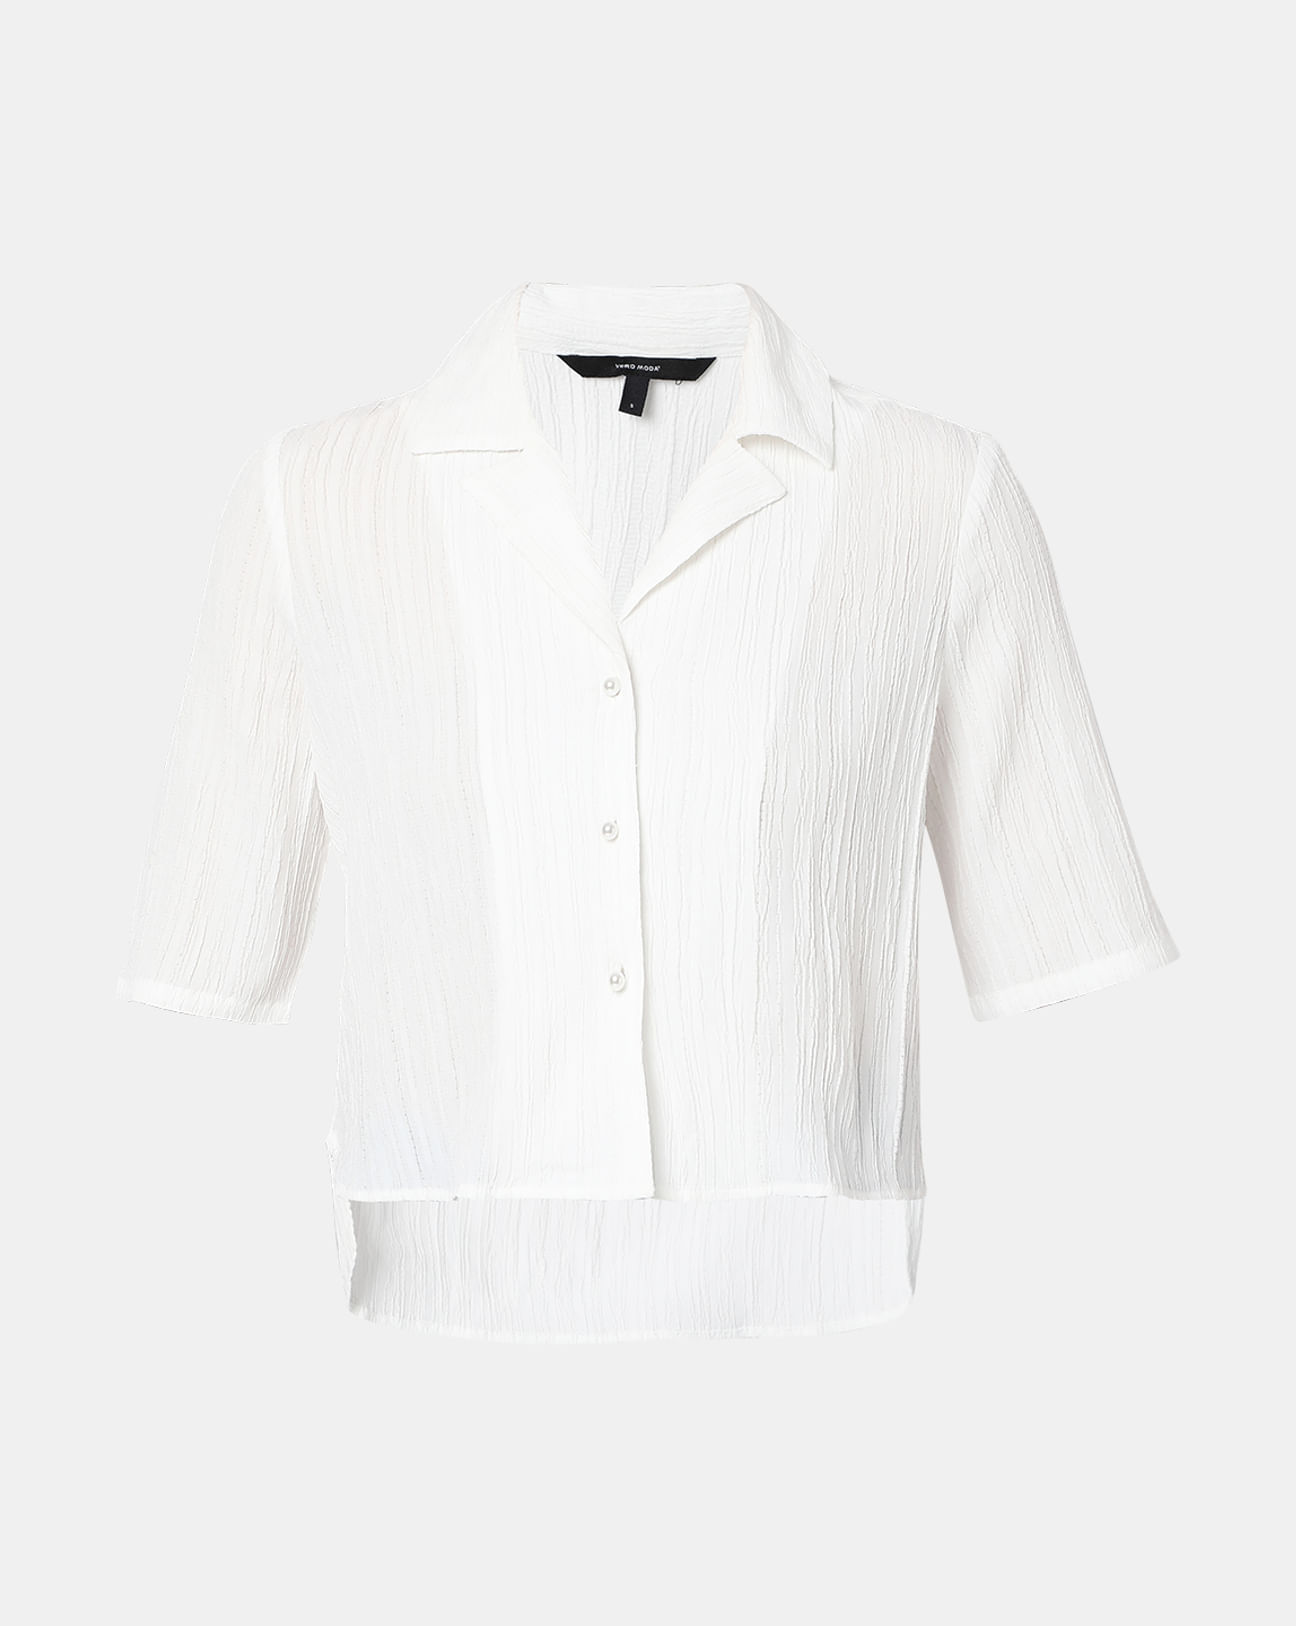 Textured Women Crop VeroModa in Online India White | For Buy Shirt